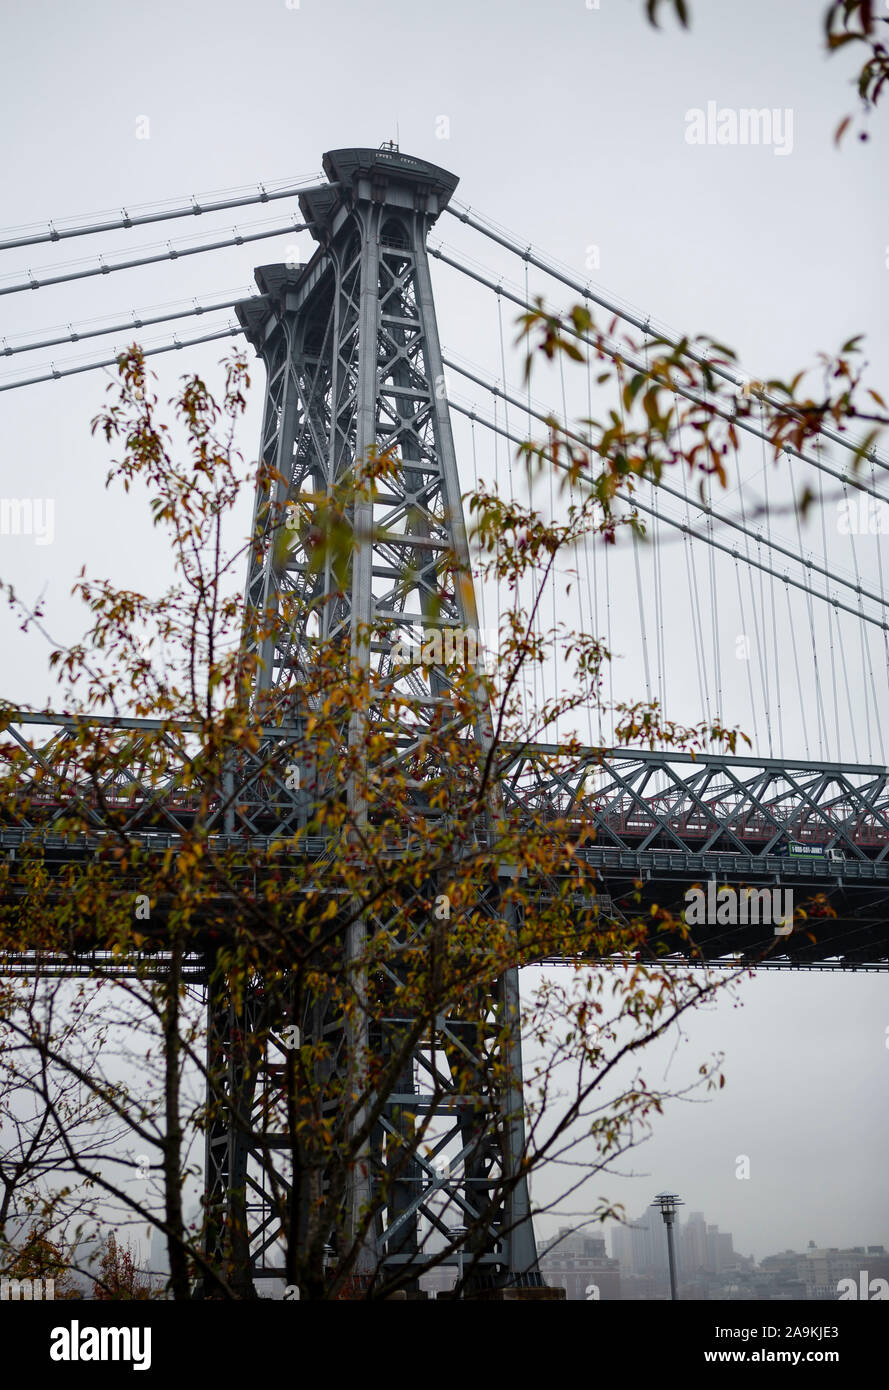 Suspension bridge tower with autumn leaves Stock Photo